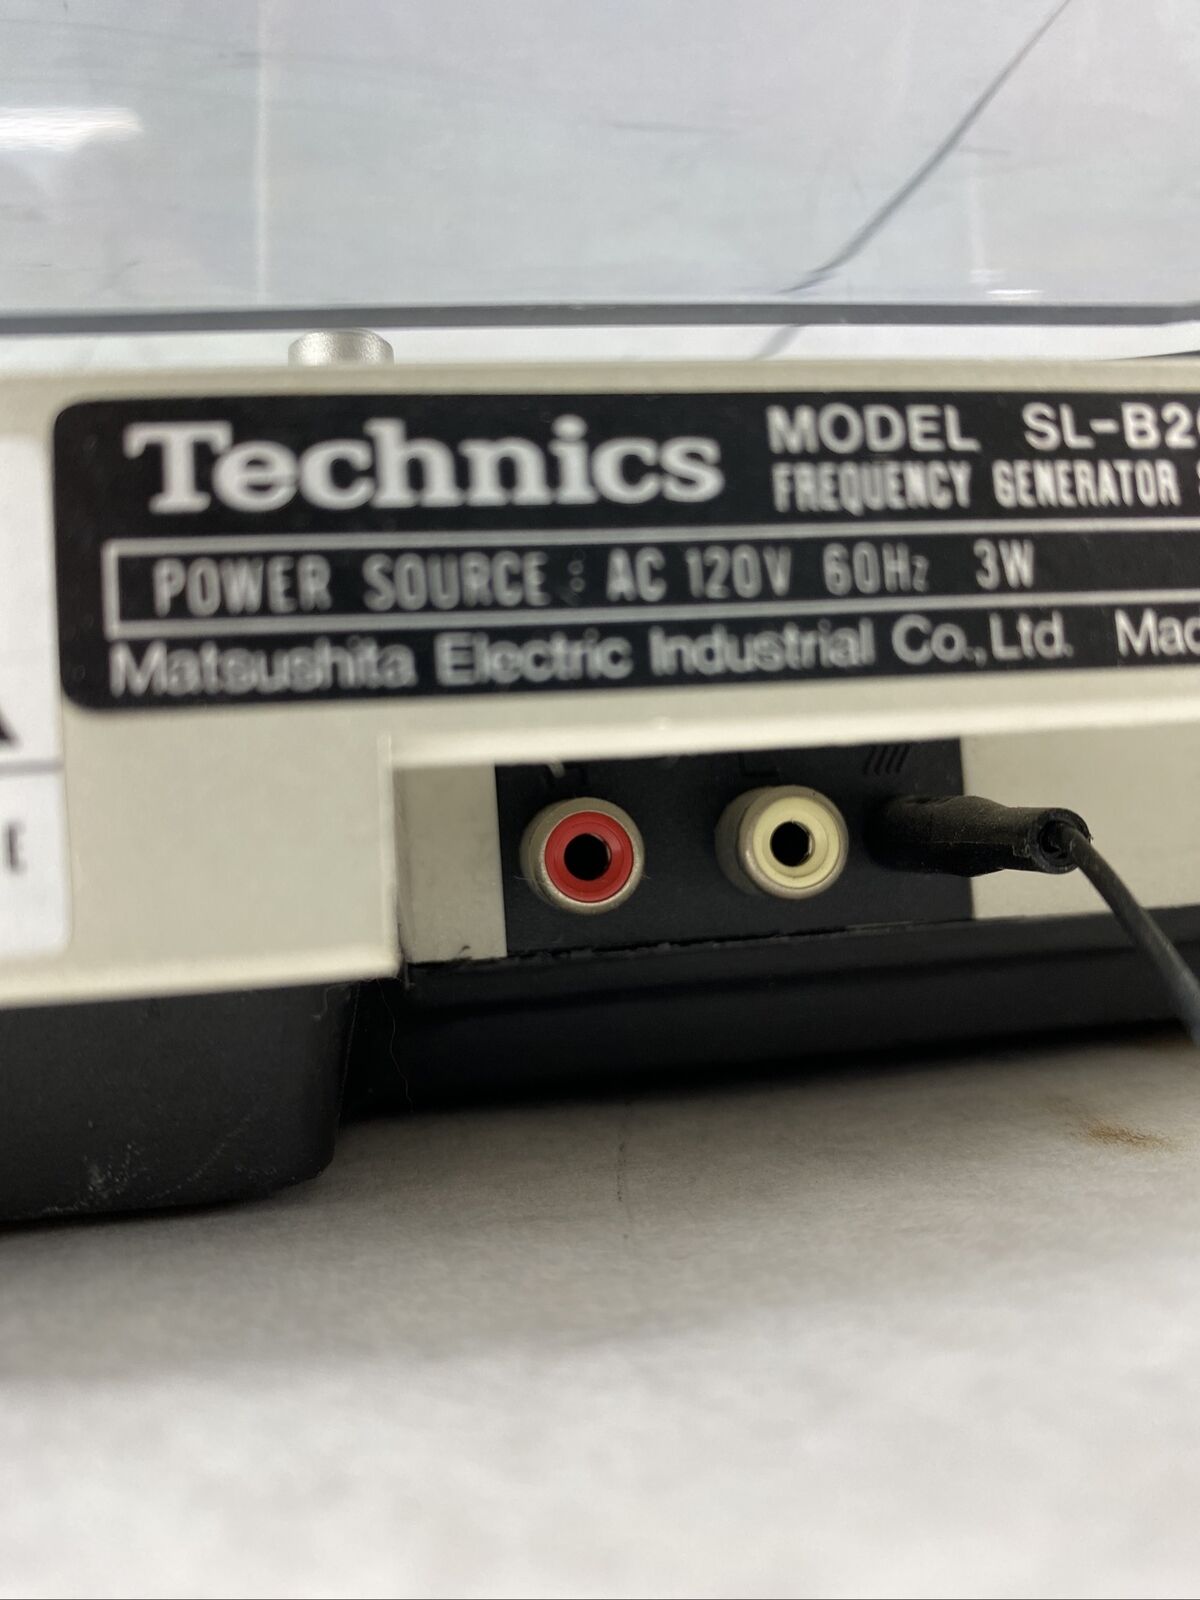 Technics SL-B200 Frequency Generator Servo Automatic Turntable